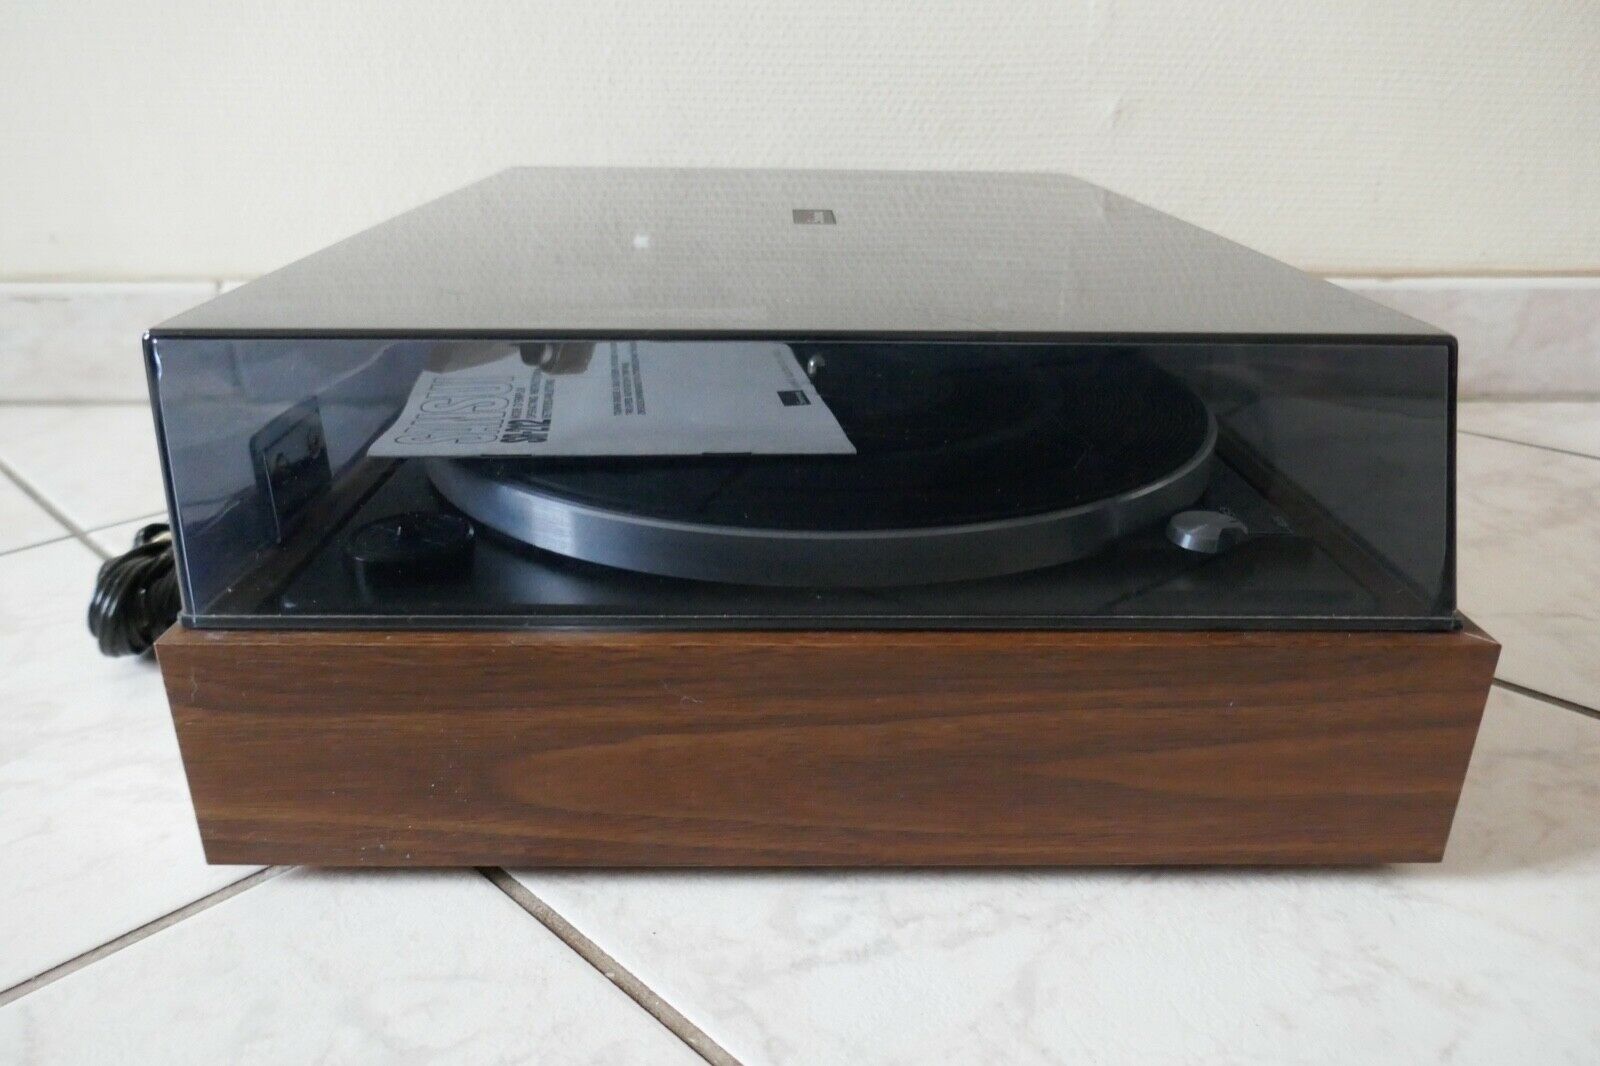 platine vinyle turntable sansui sr-212 vintage occasion